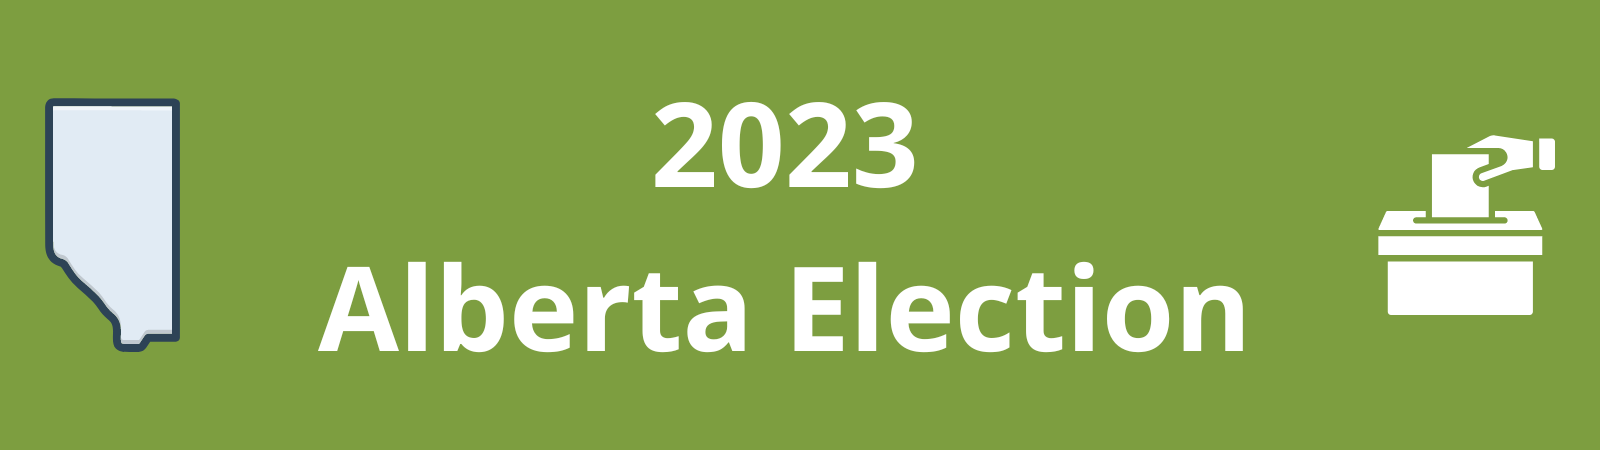 2023 Alberta Election